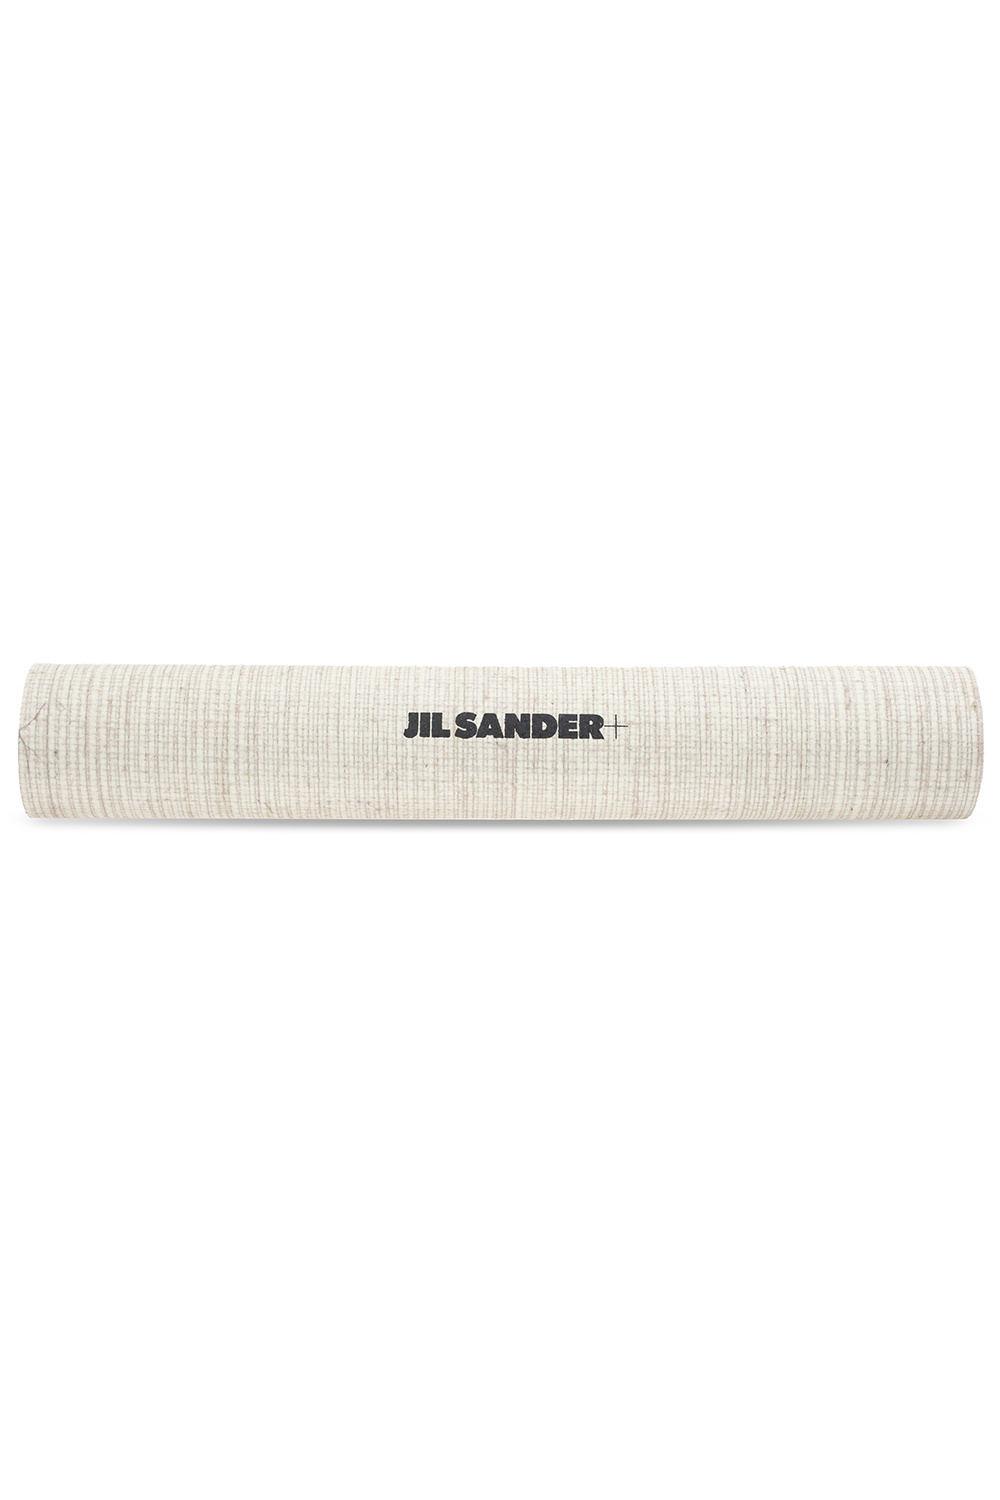 jil sander taos leather shoulder bag item - Yoga mat JIL SANDER+ -  IetpShops LC